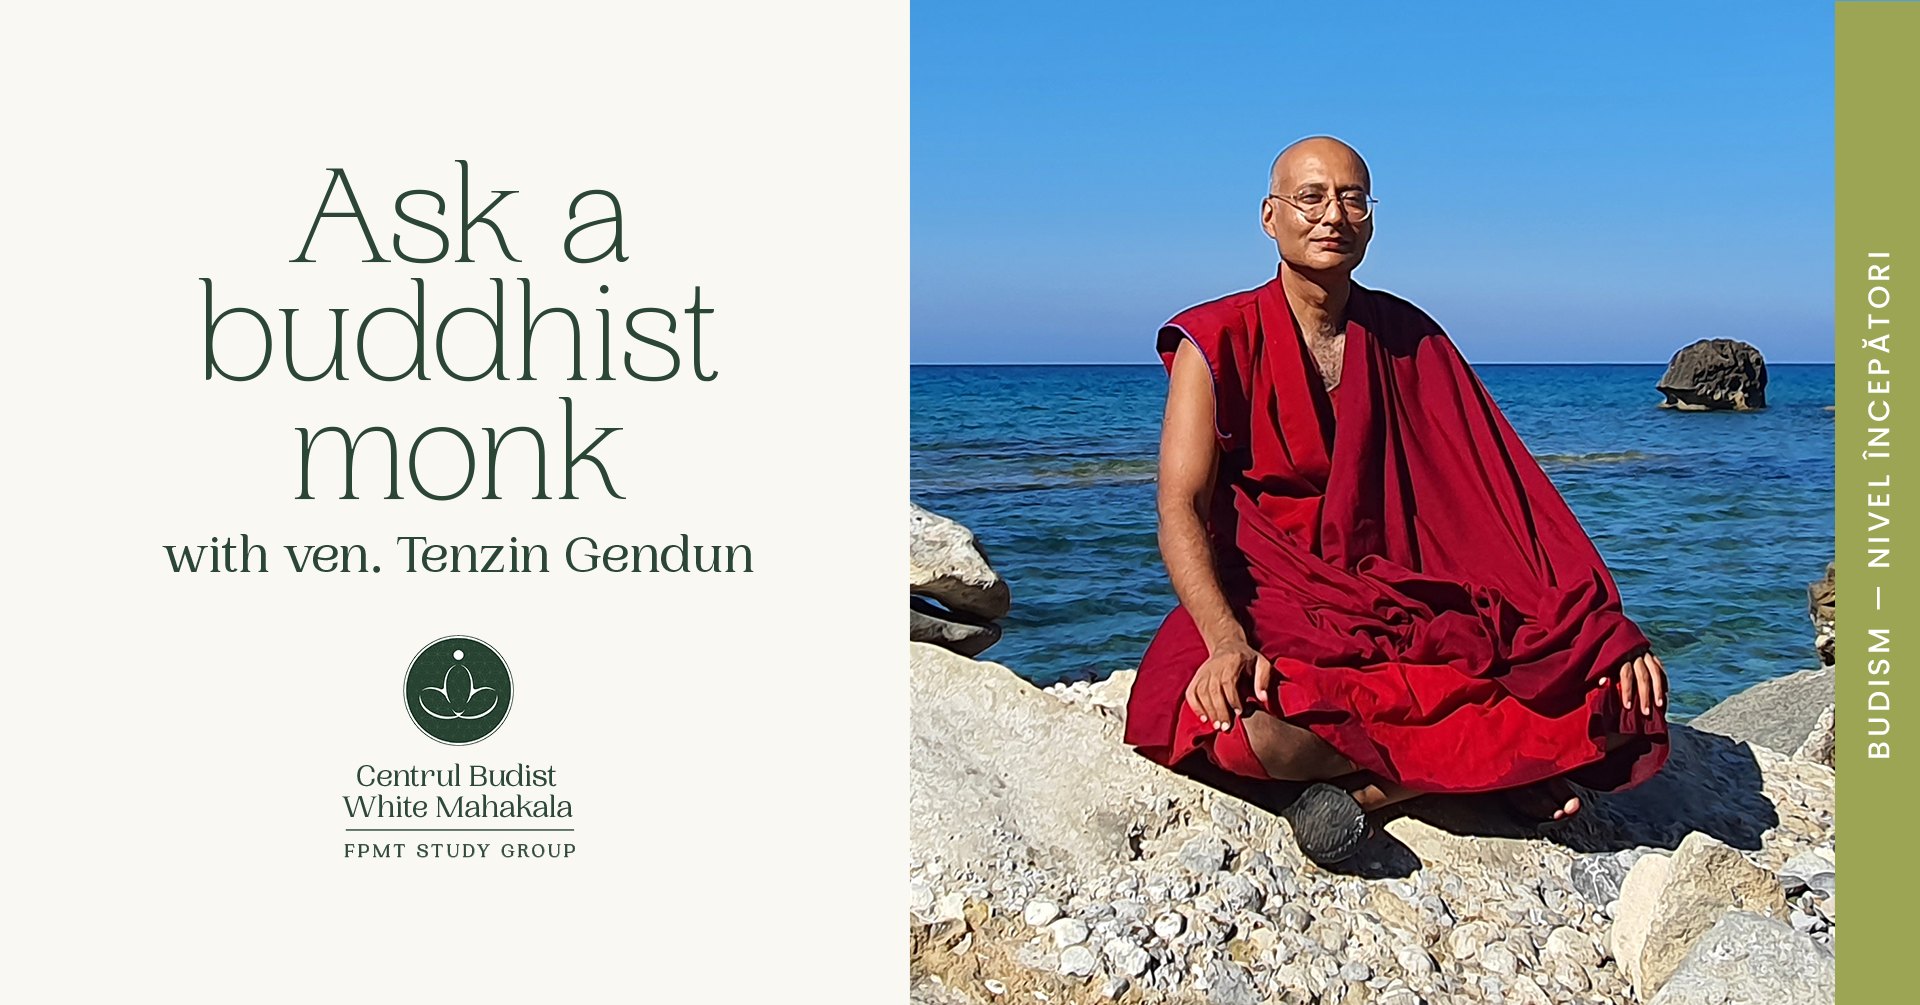 Ask a Buddhist monk – private talk with ven. Tenzin Gendun